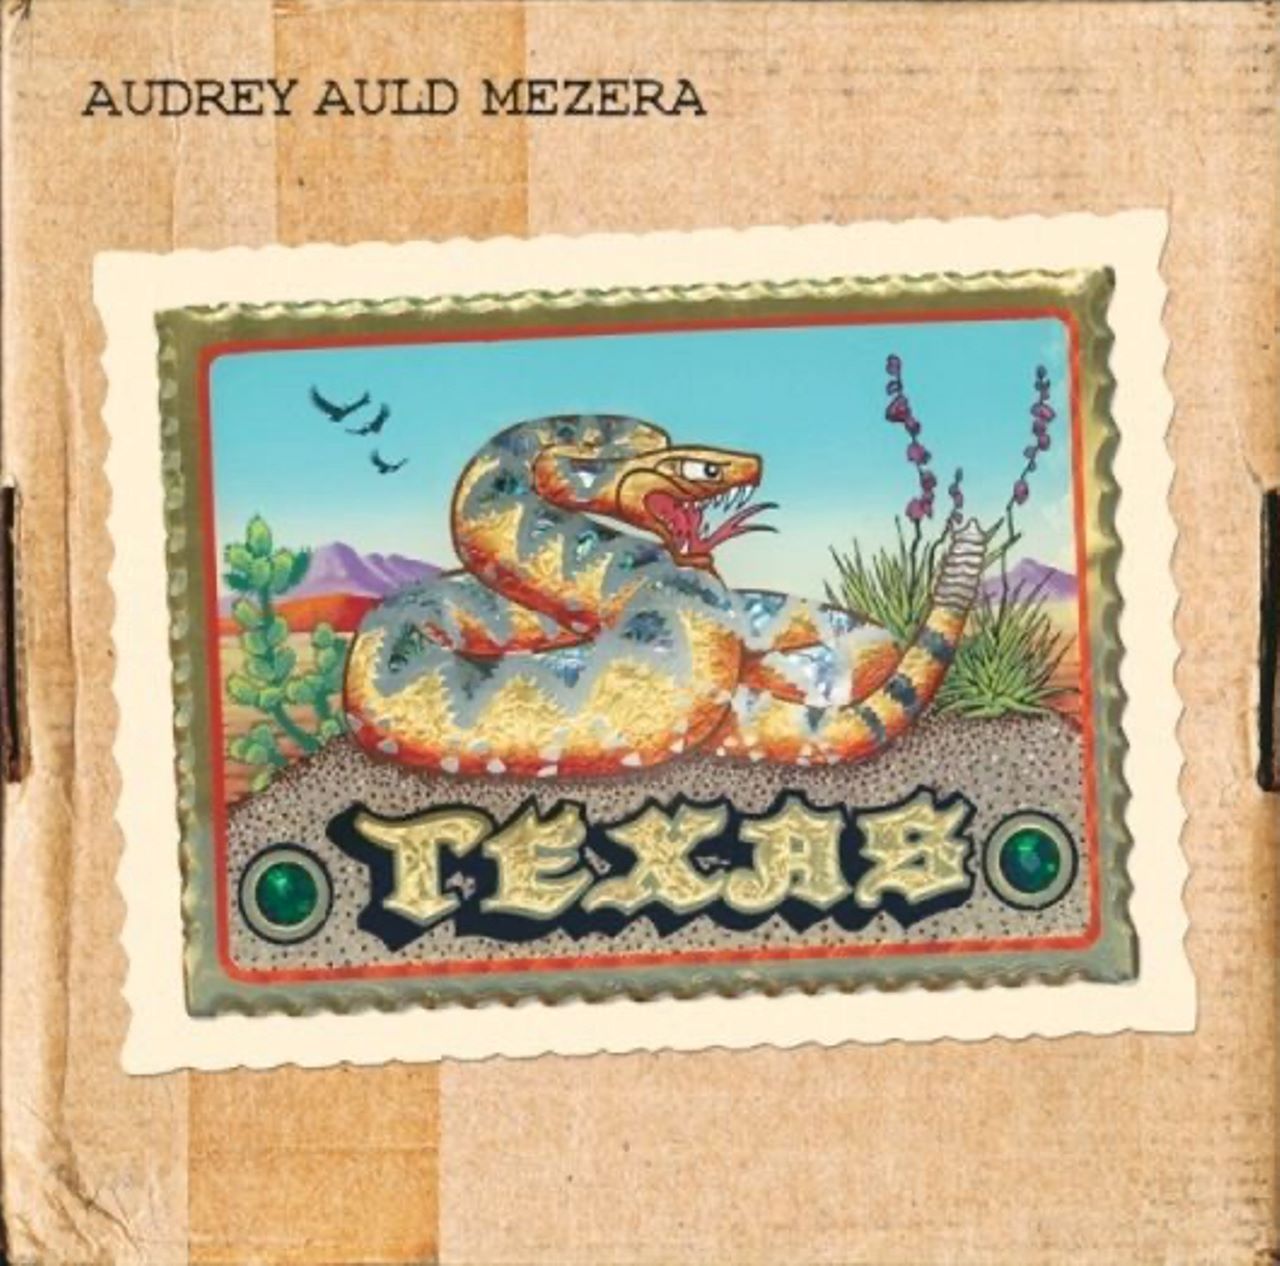 Audrey Auld Mezera - Texas cover album